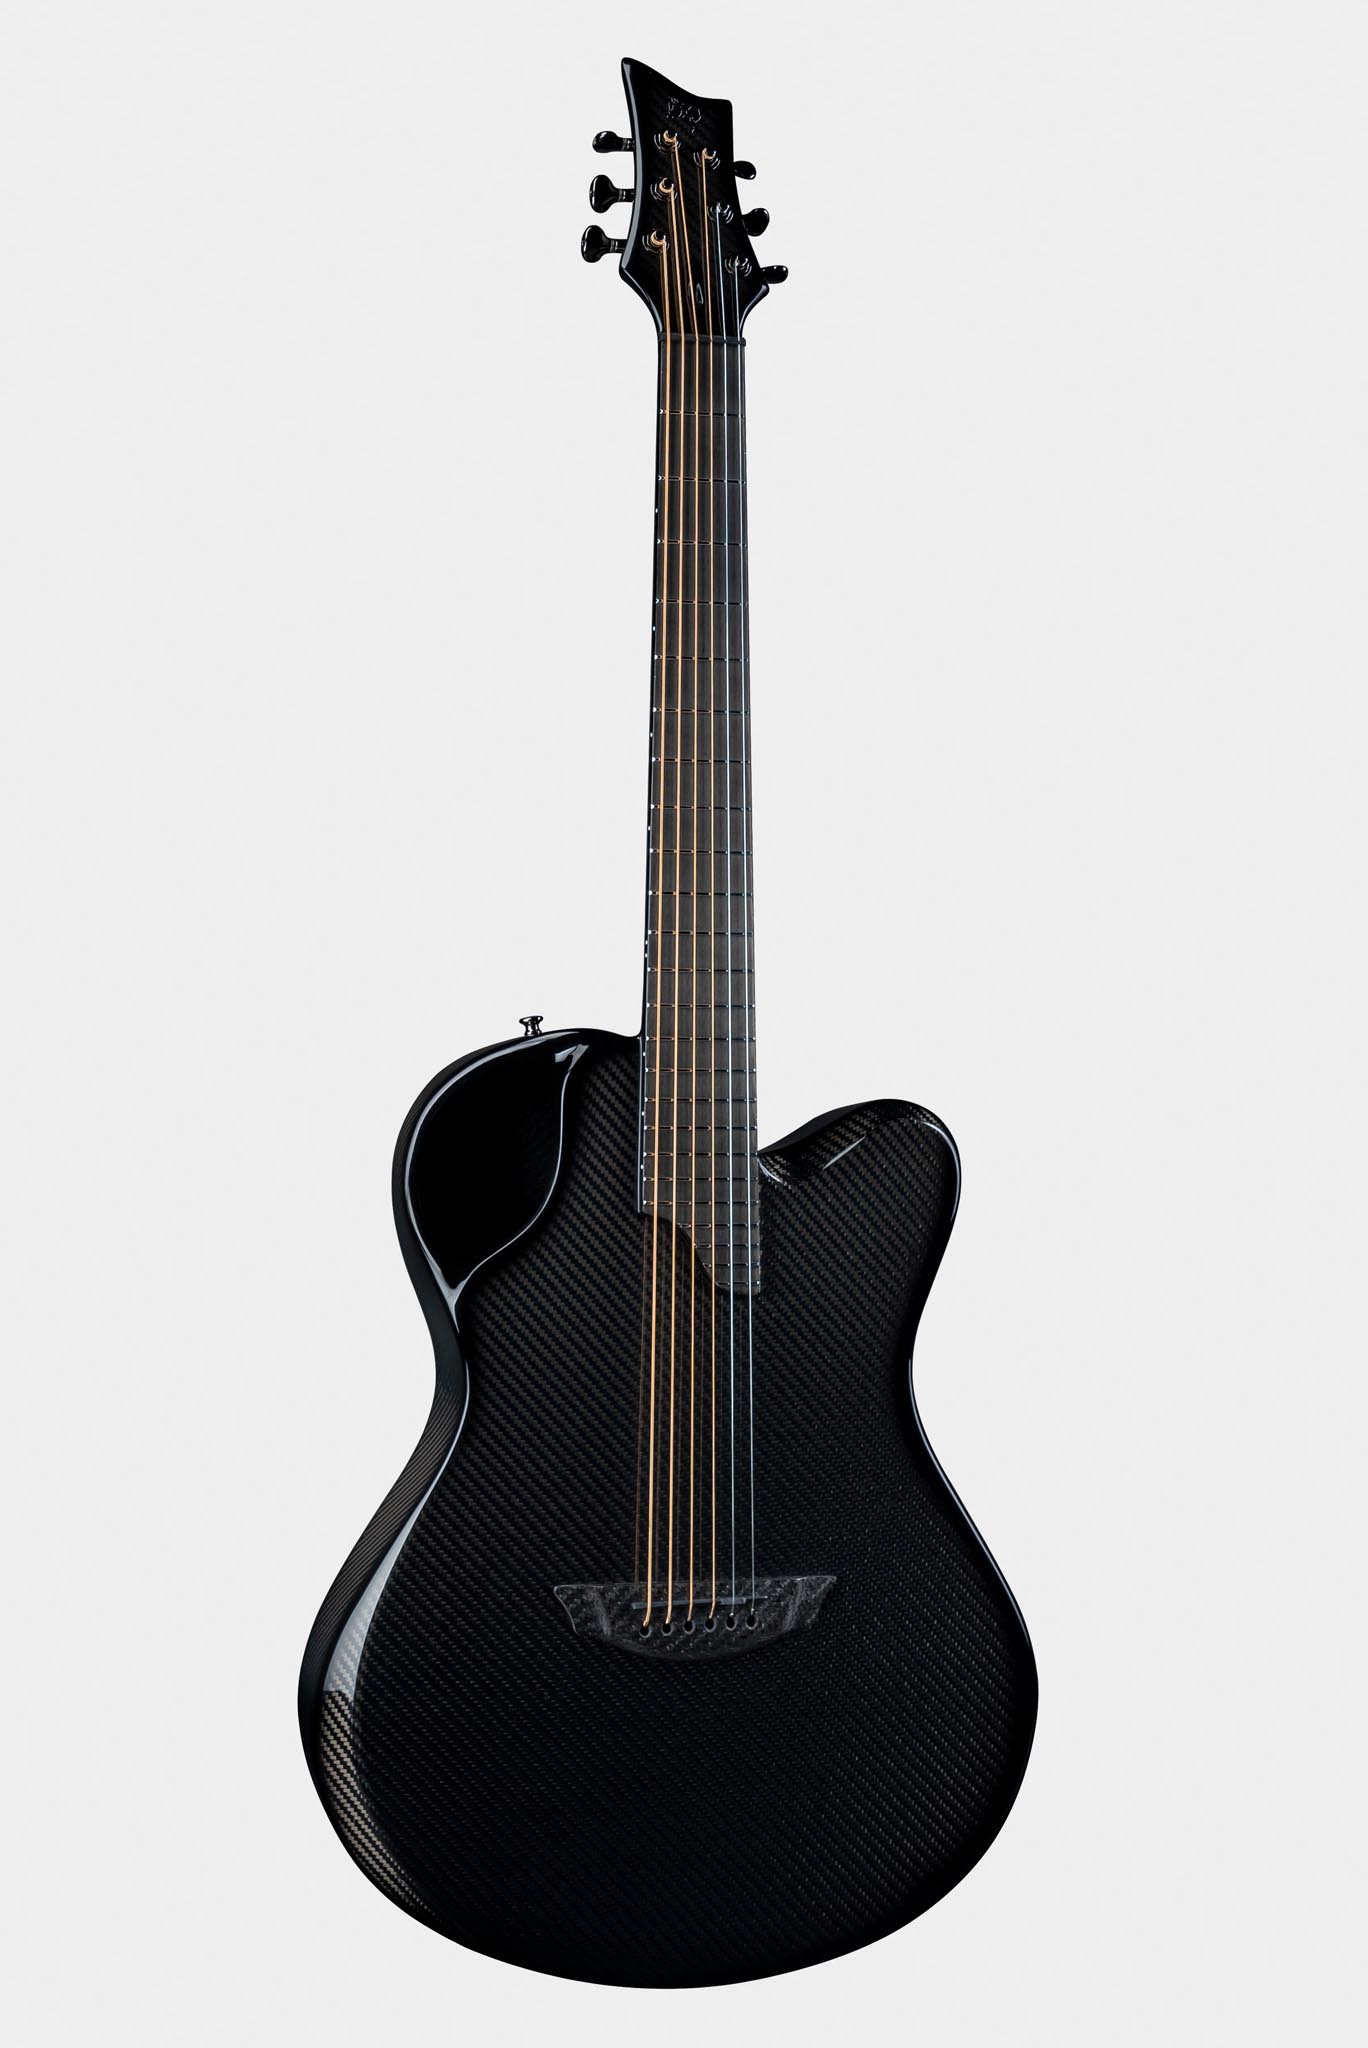 Sleek black Emerald X20 acoustic guitar with carbon fiber body